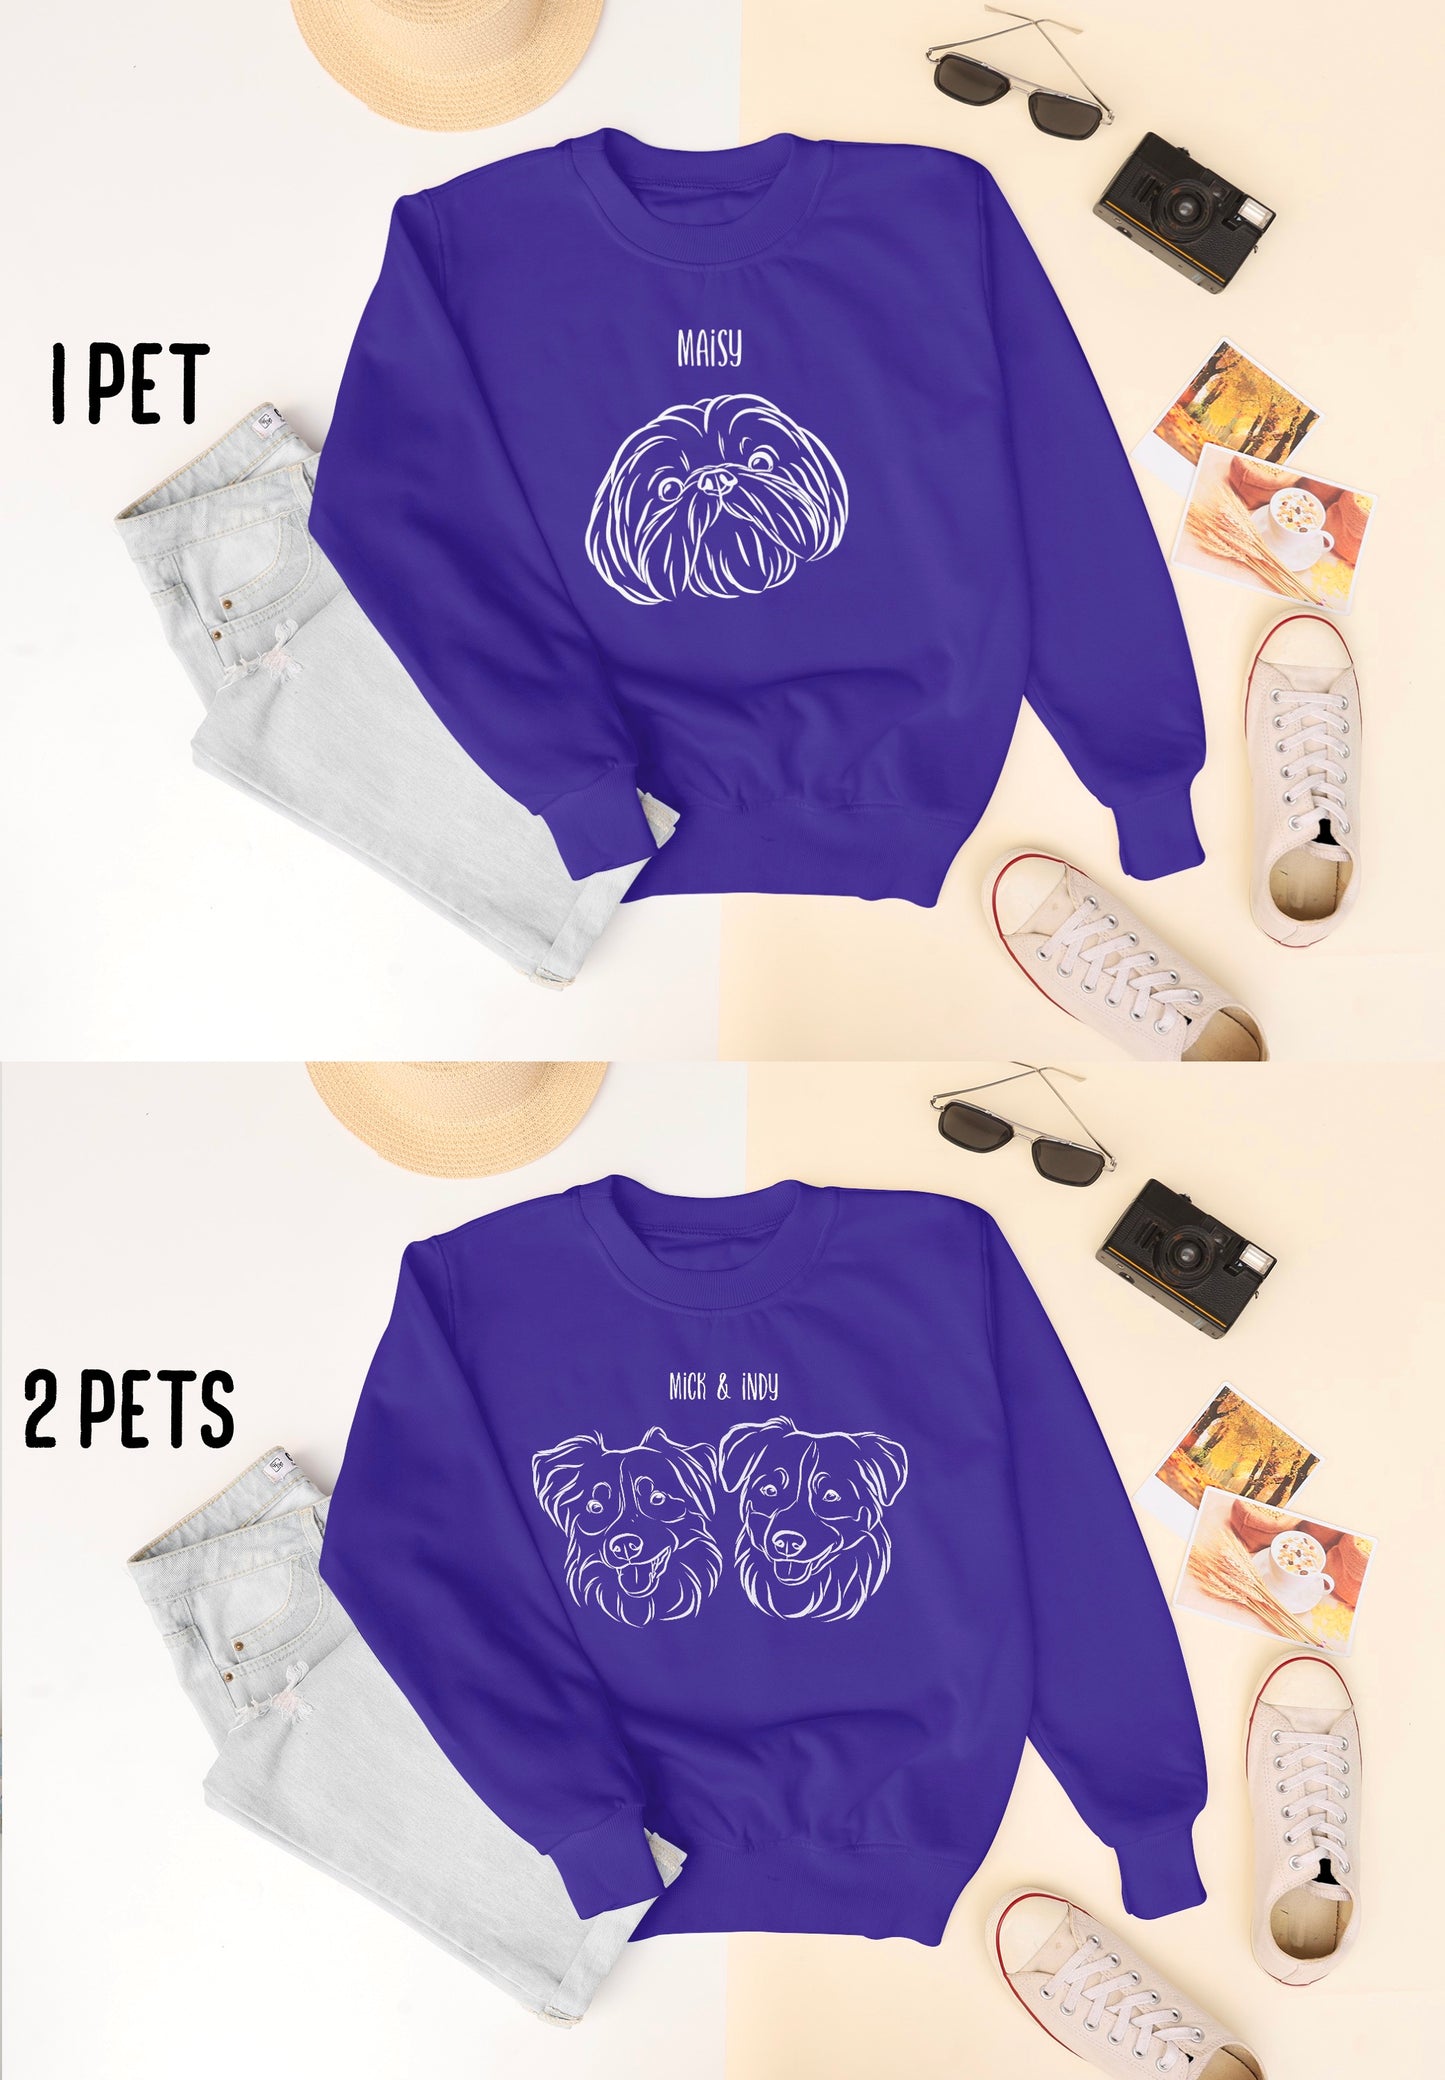 Outline Pet Portrait Sweatshirt (Purple)